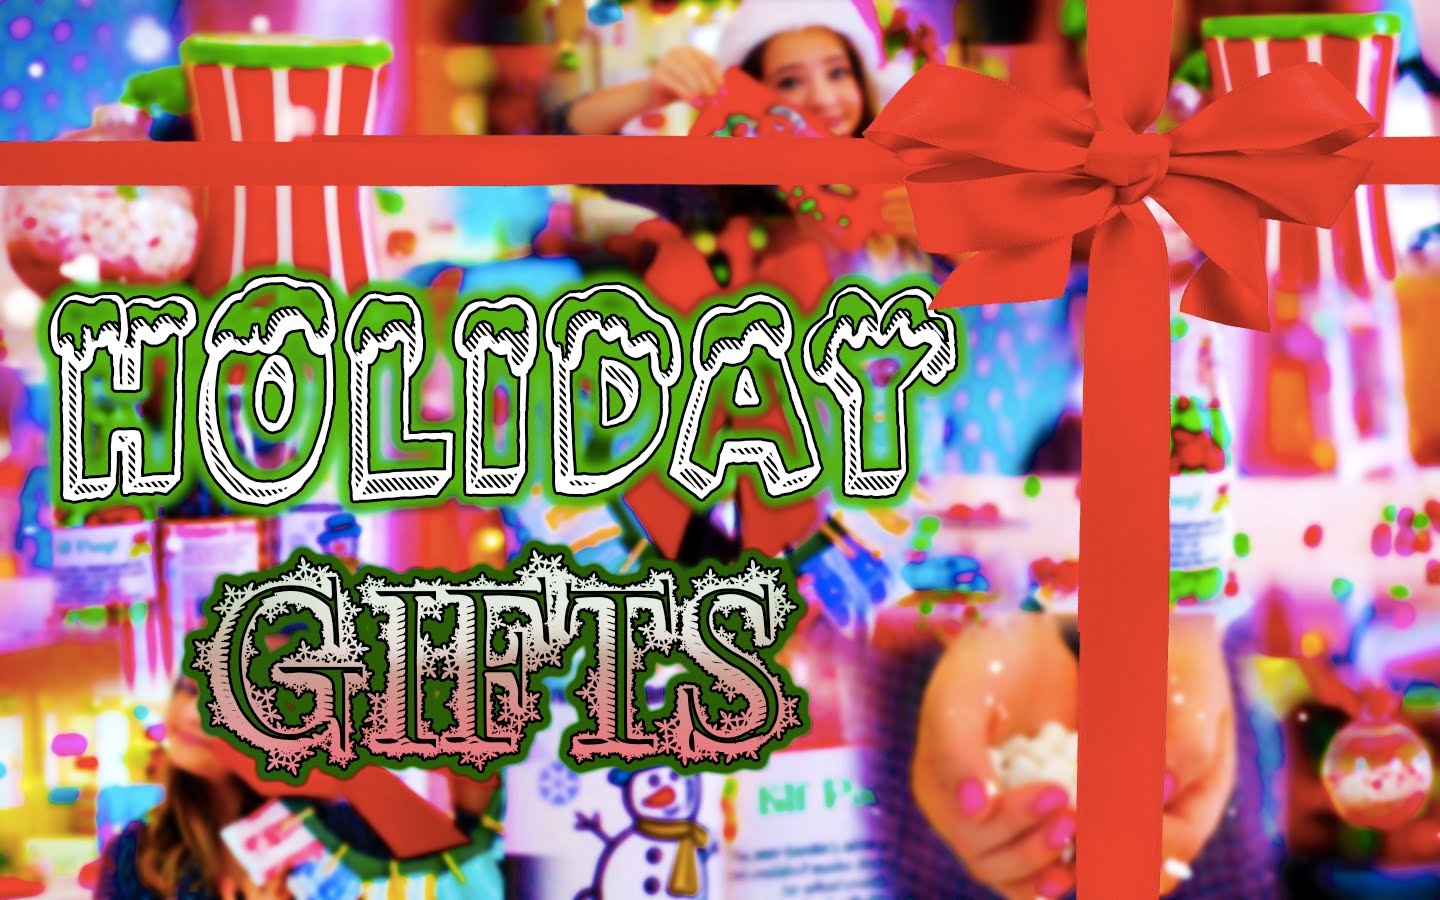 DIY Holiday Present Ideas Everyone Will Love! #JingELBELLS